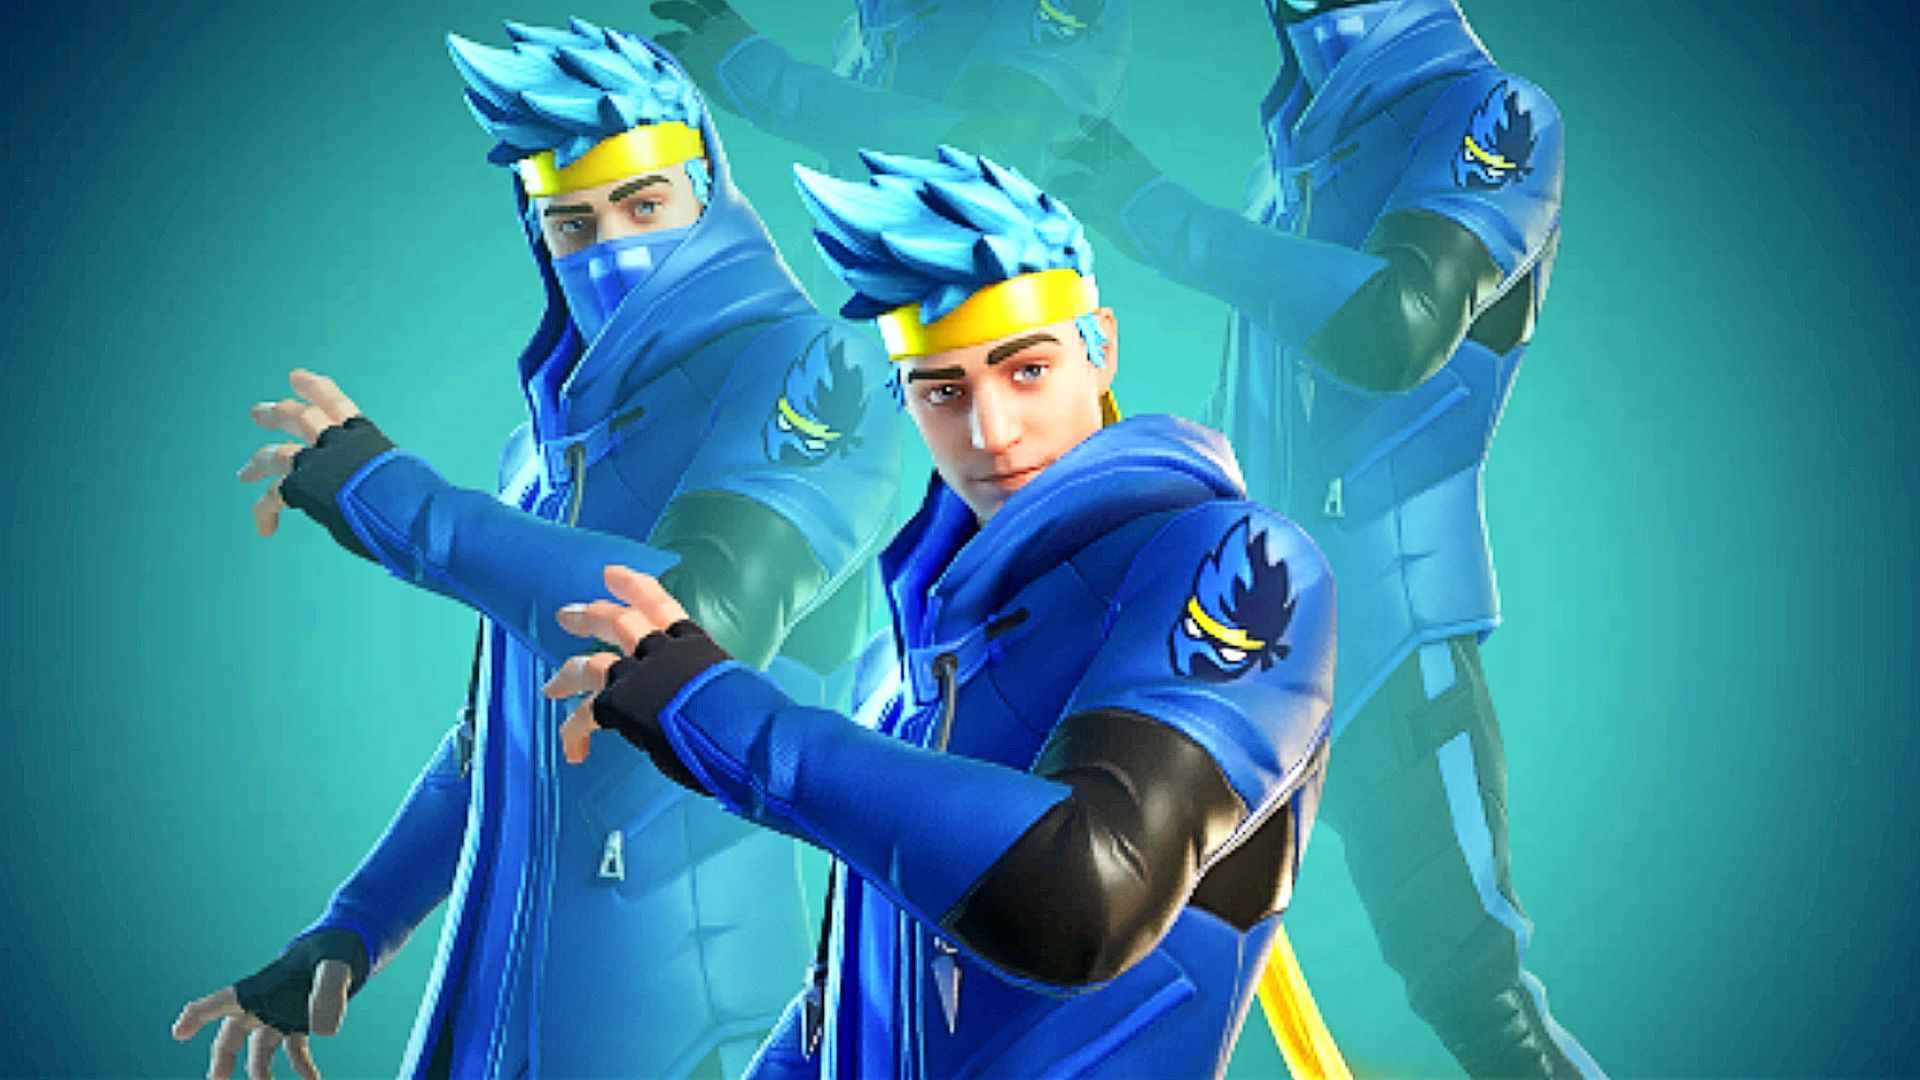 Fortnite is finally getting an official Ninja skin